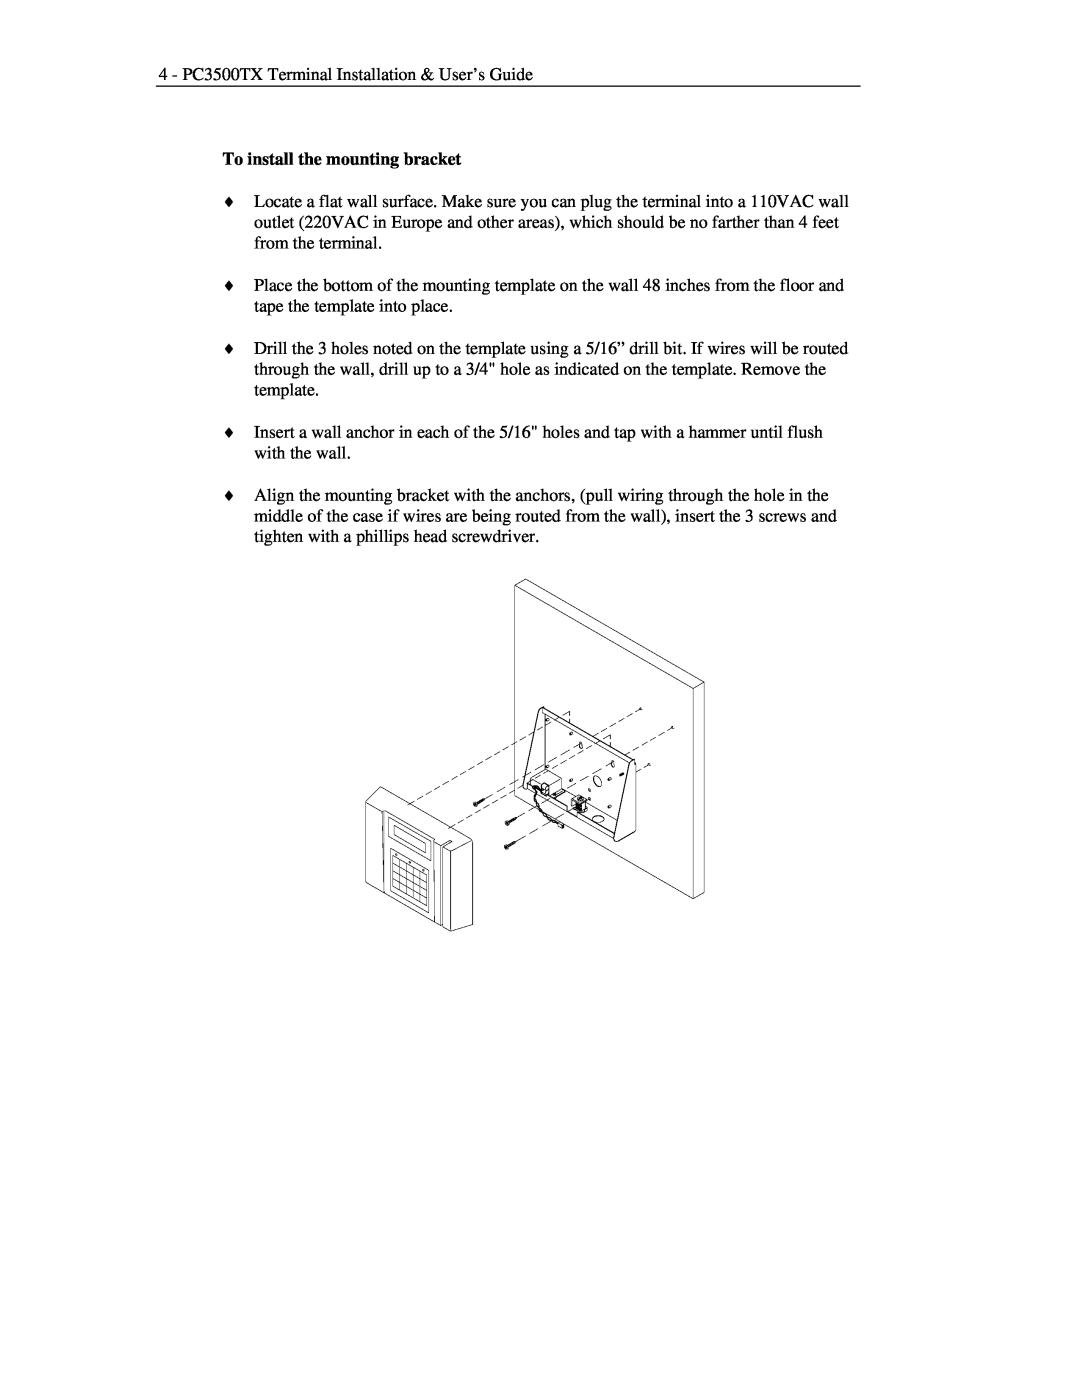 Lathem PC3500TX manual To install the mounting bracket 